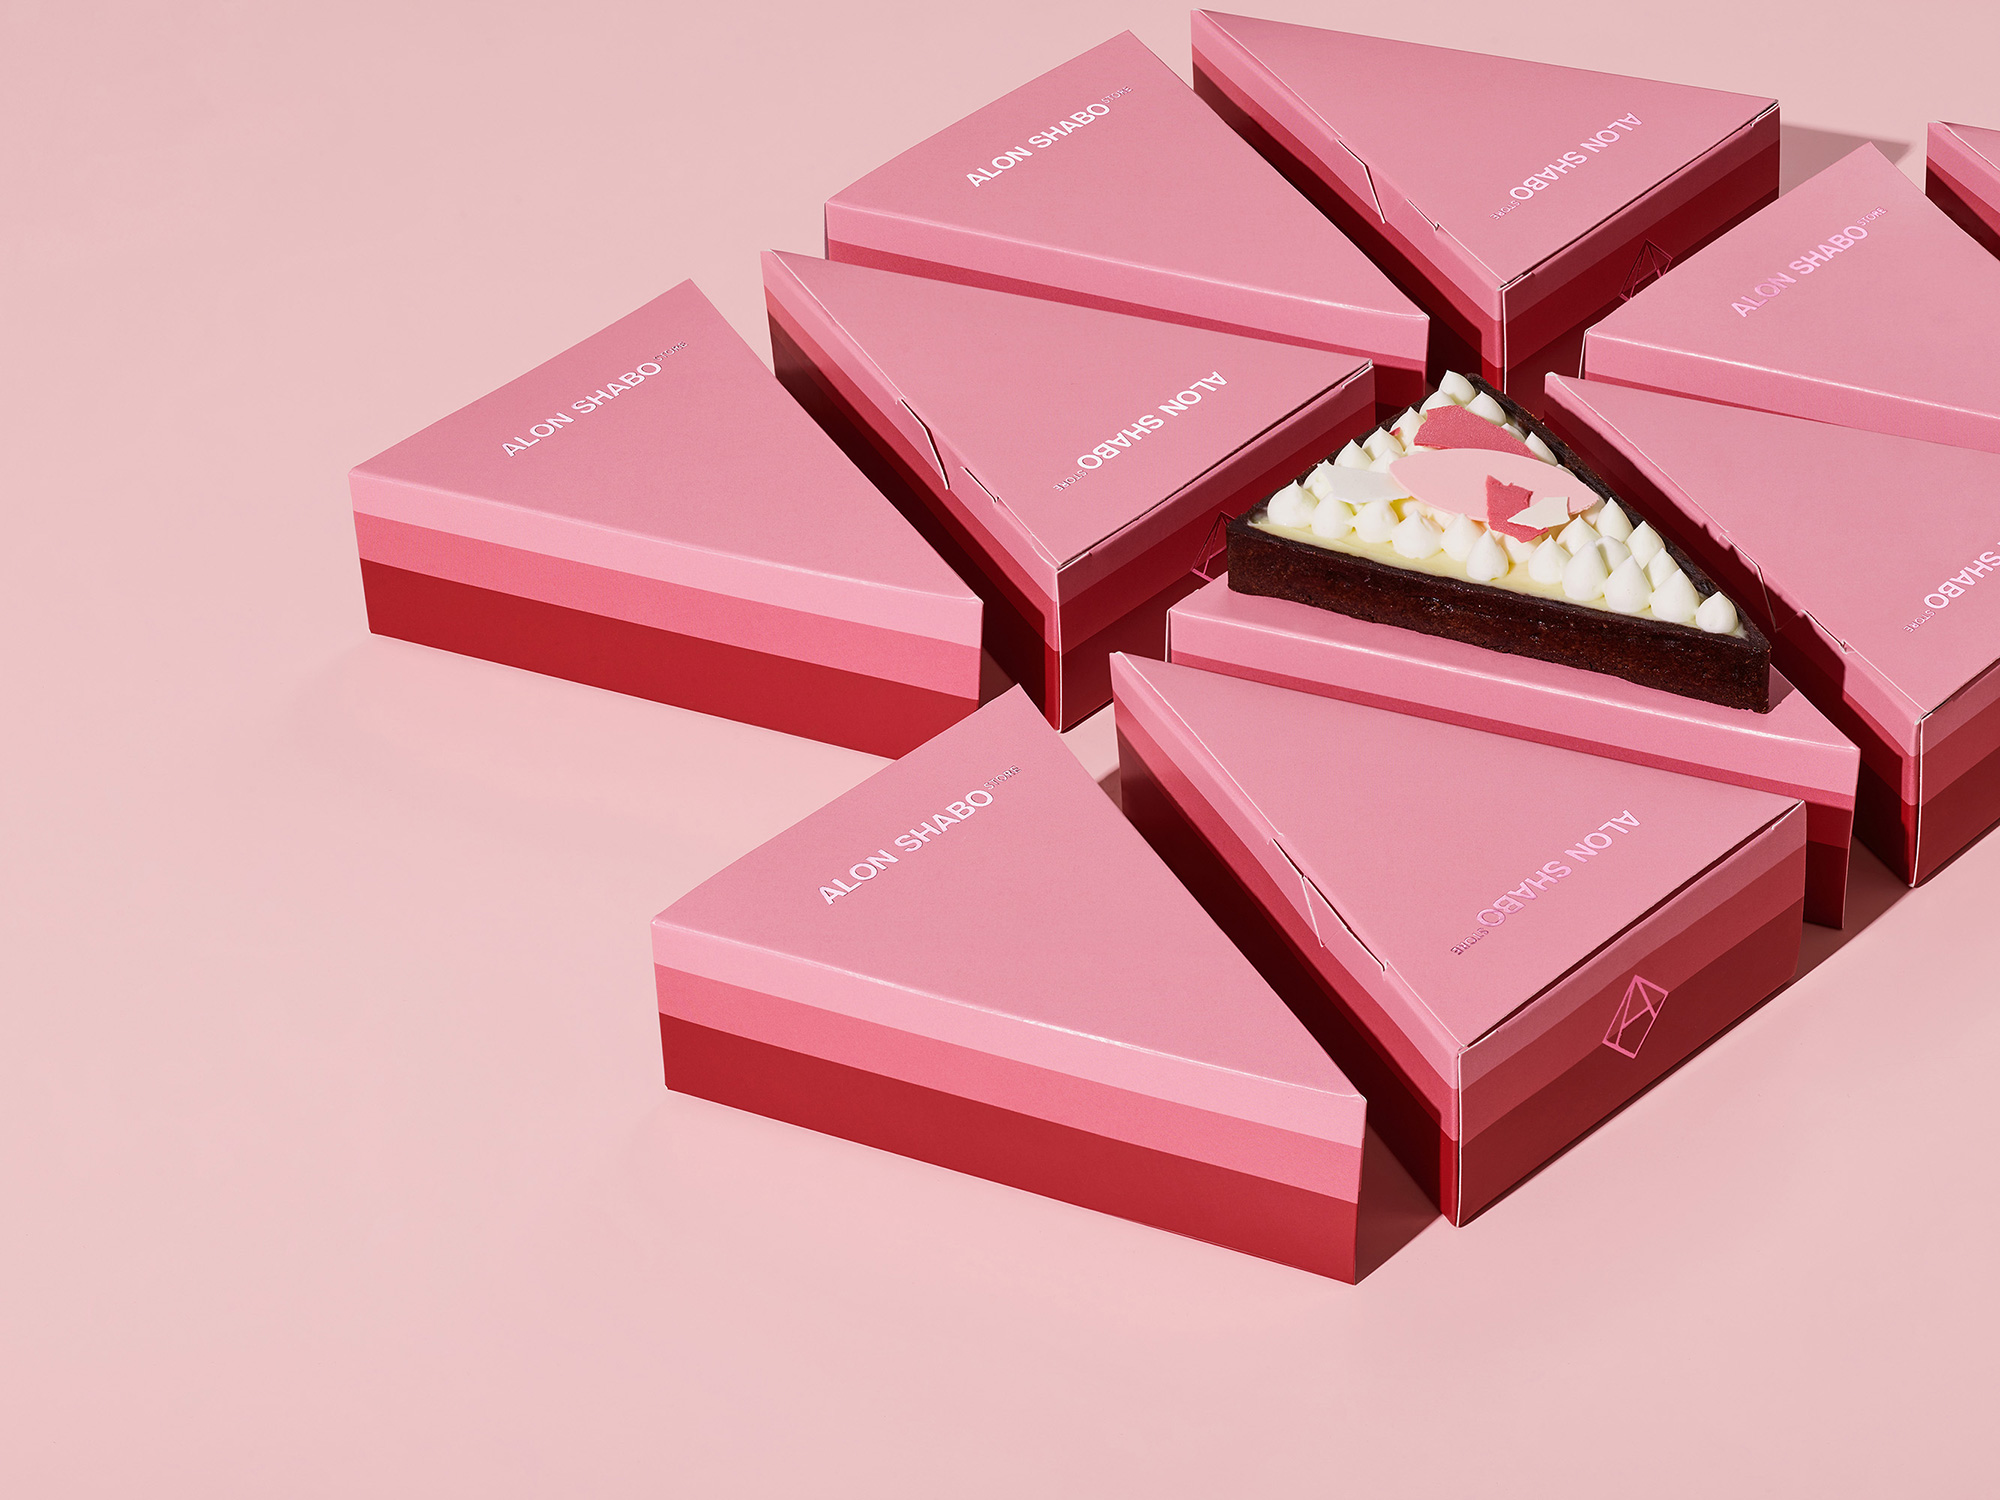 Triangular pastry packaging design